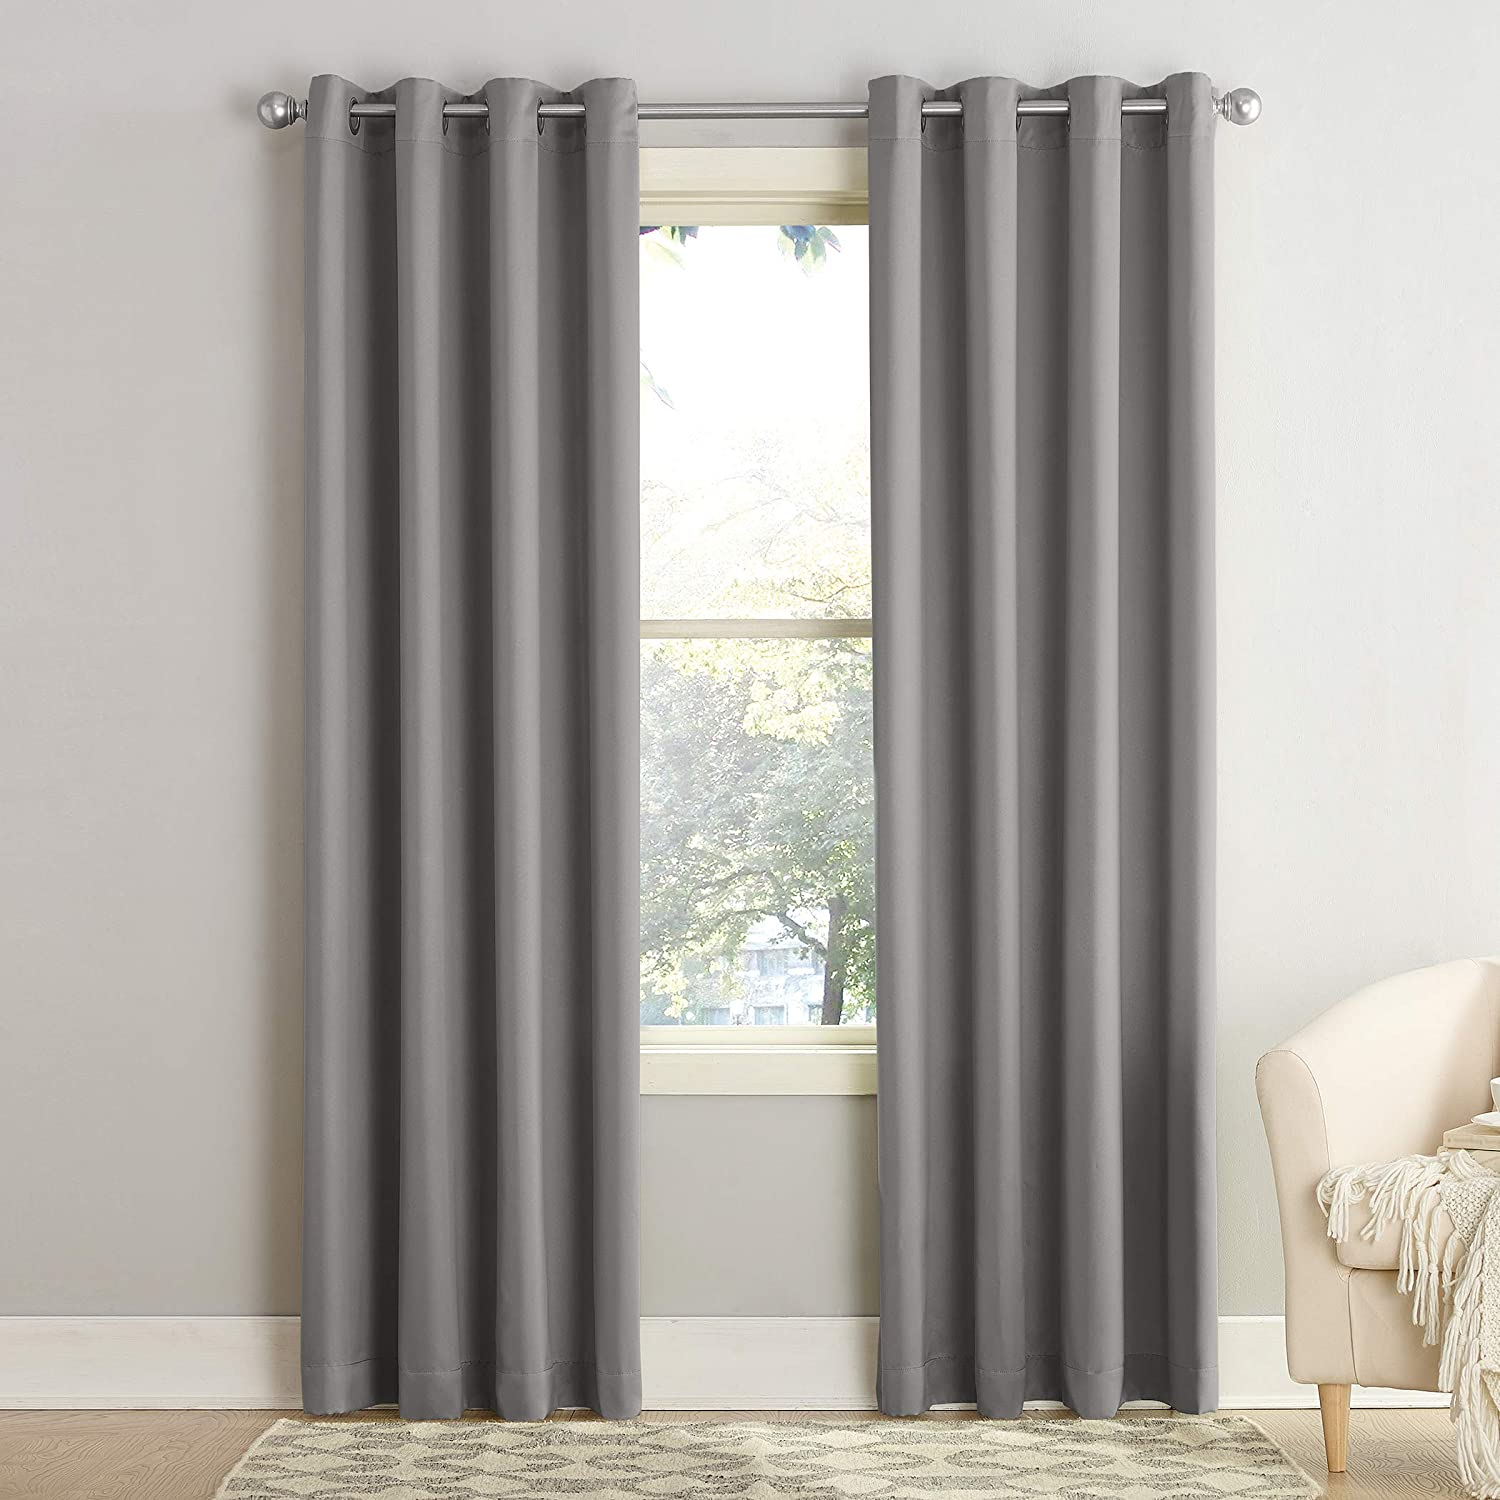 Amazon.com: Sun Zero Barrow Energy Efficient Grommet Curtain Panel, 54" x 95", Gray : Home & Kitchen $7.35